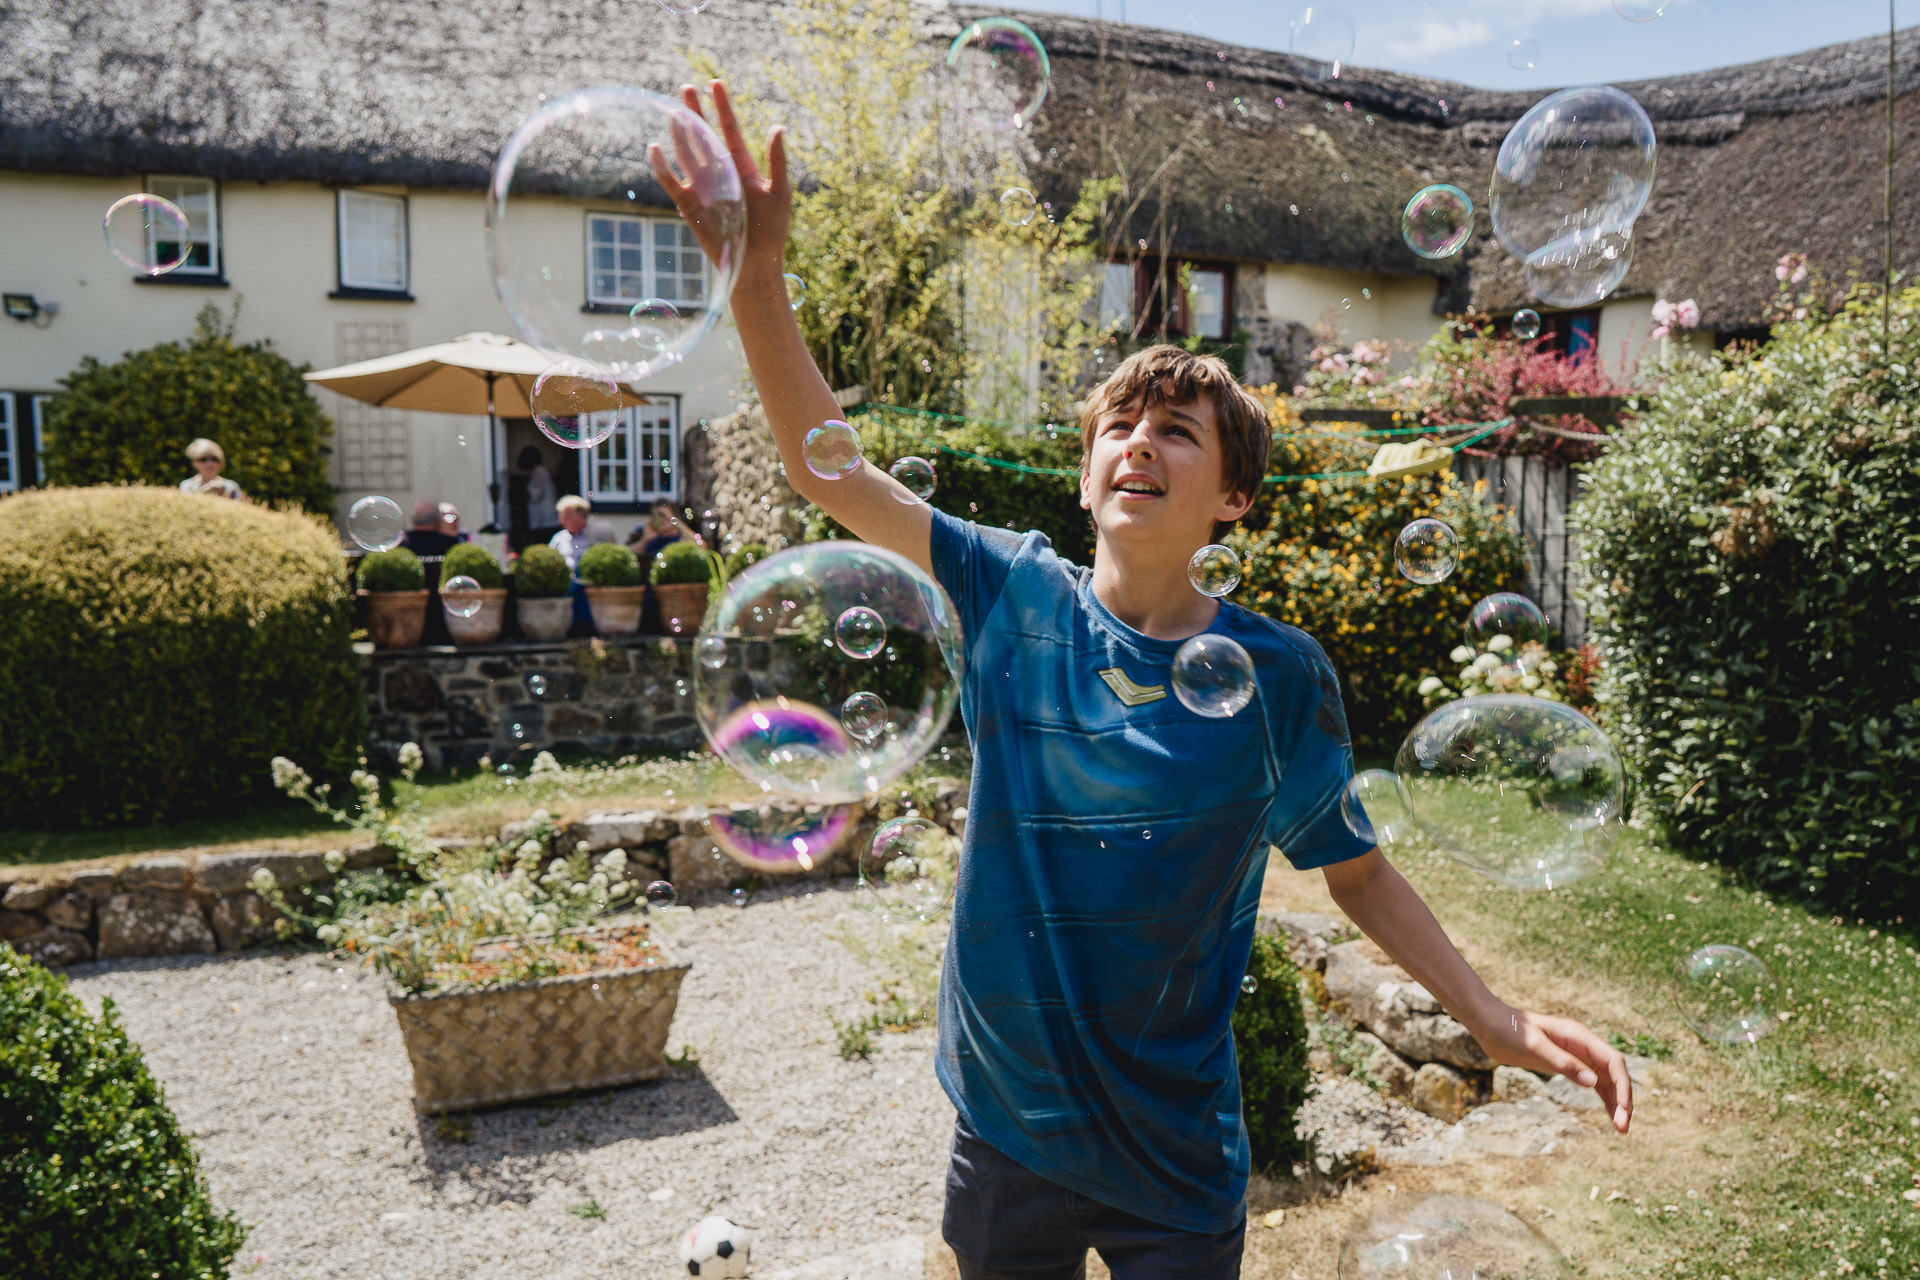 A teenage boy jumping amongst bubbles